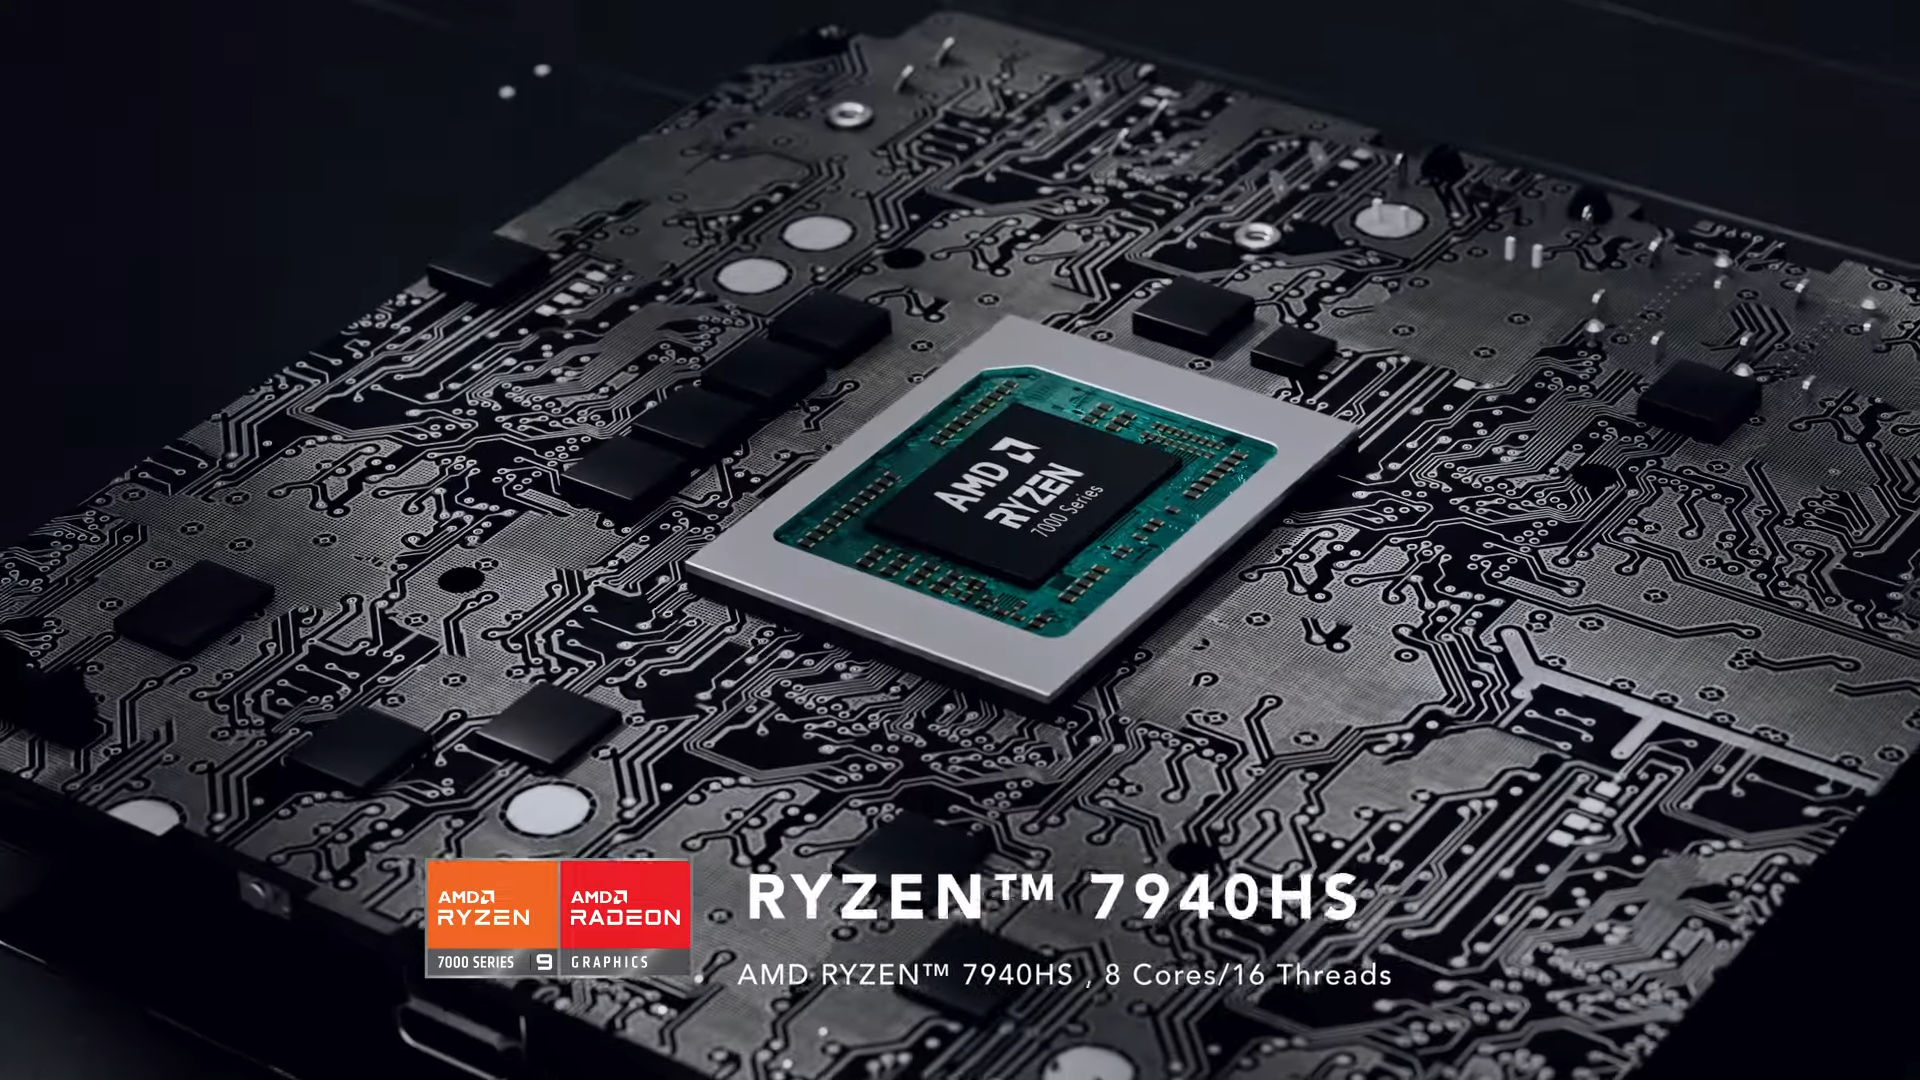 MINISFORUM UM690 mini PC features AMD Ryzen 9 6900HX processor